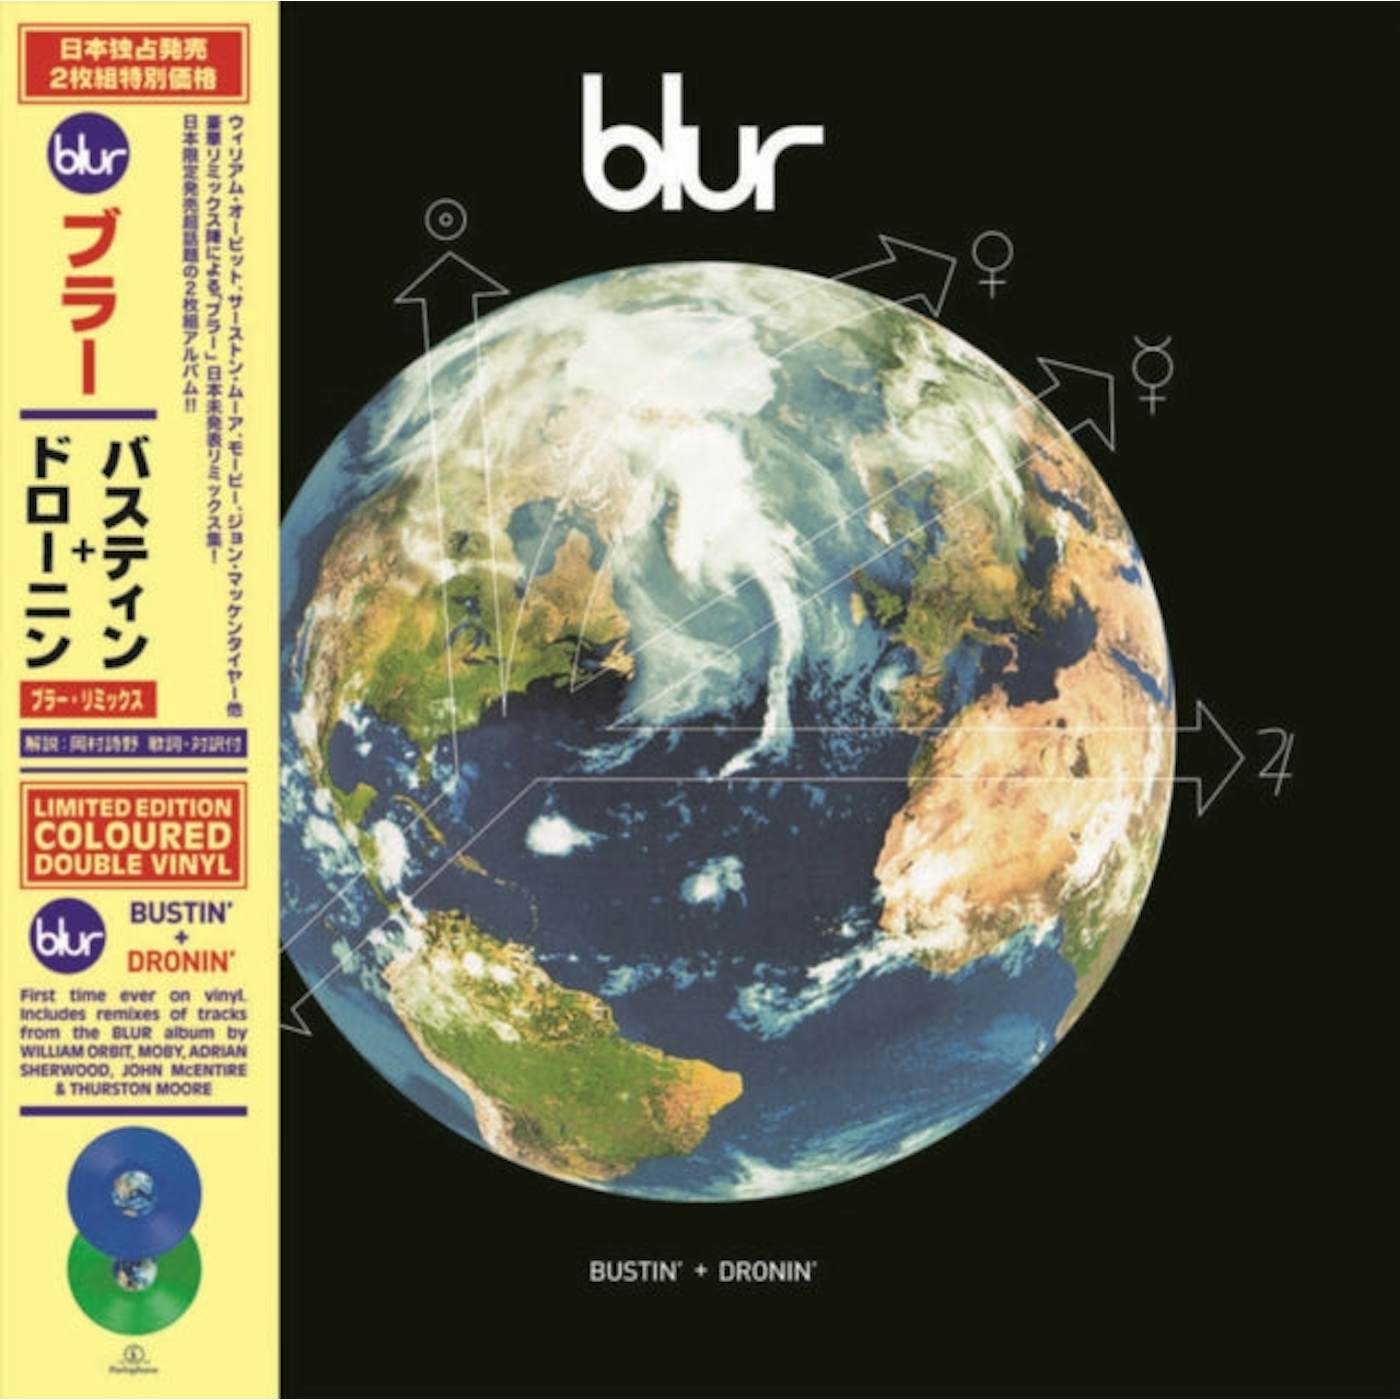 Blur LP - Bustin' + Dronin (Blue/Green Vinyl) (Rsd 2022)